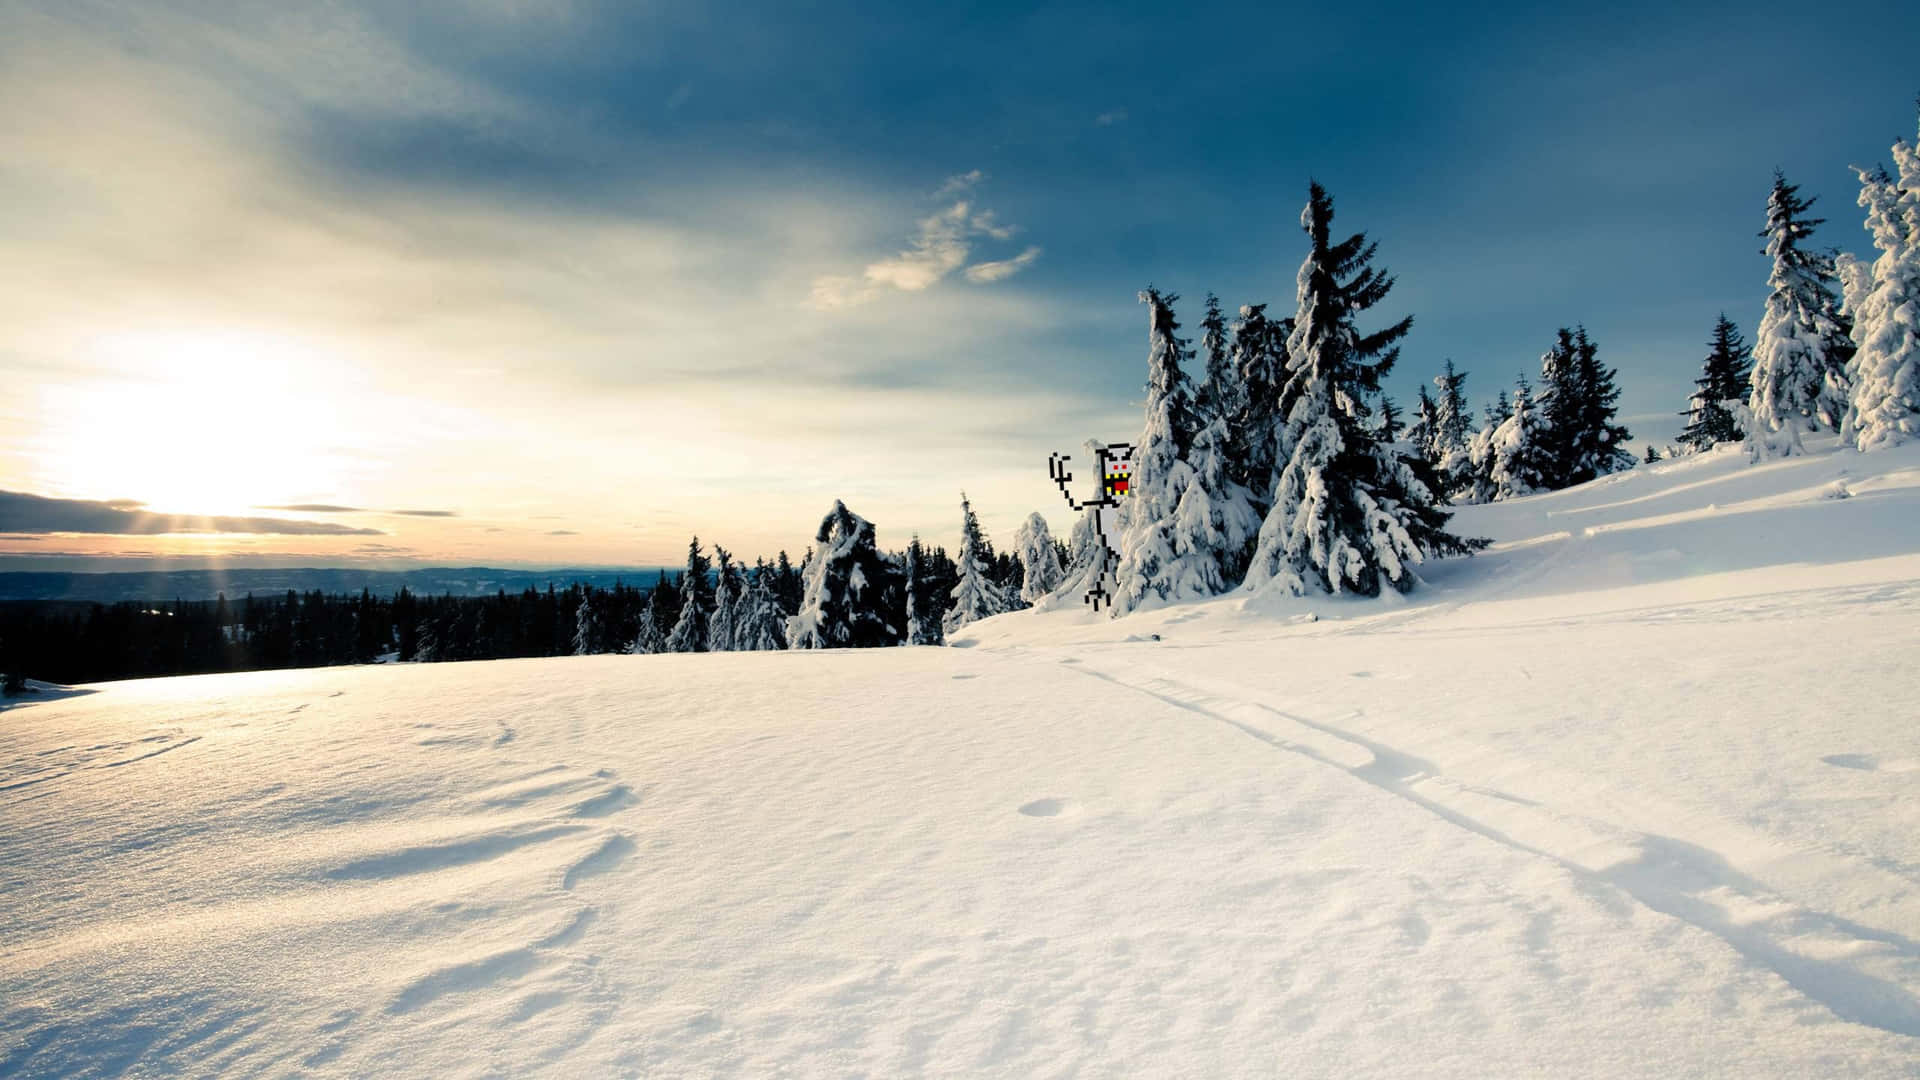 Enchanting Snowy Forest In Winter Wonderland Background